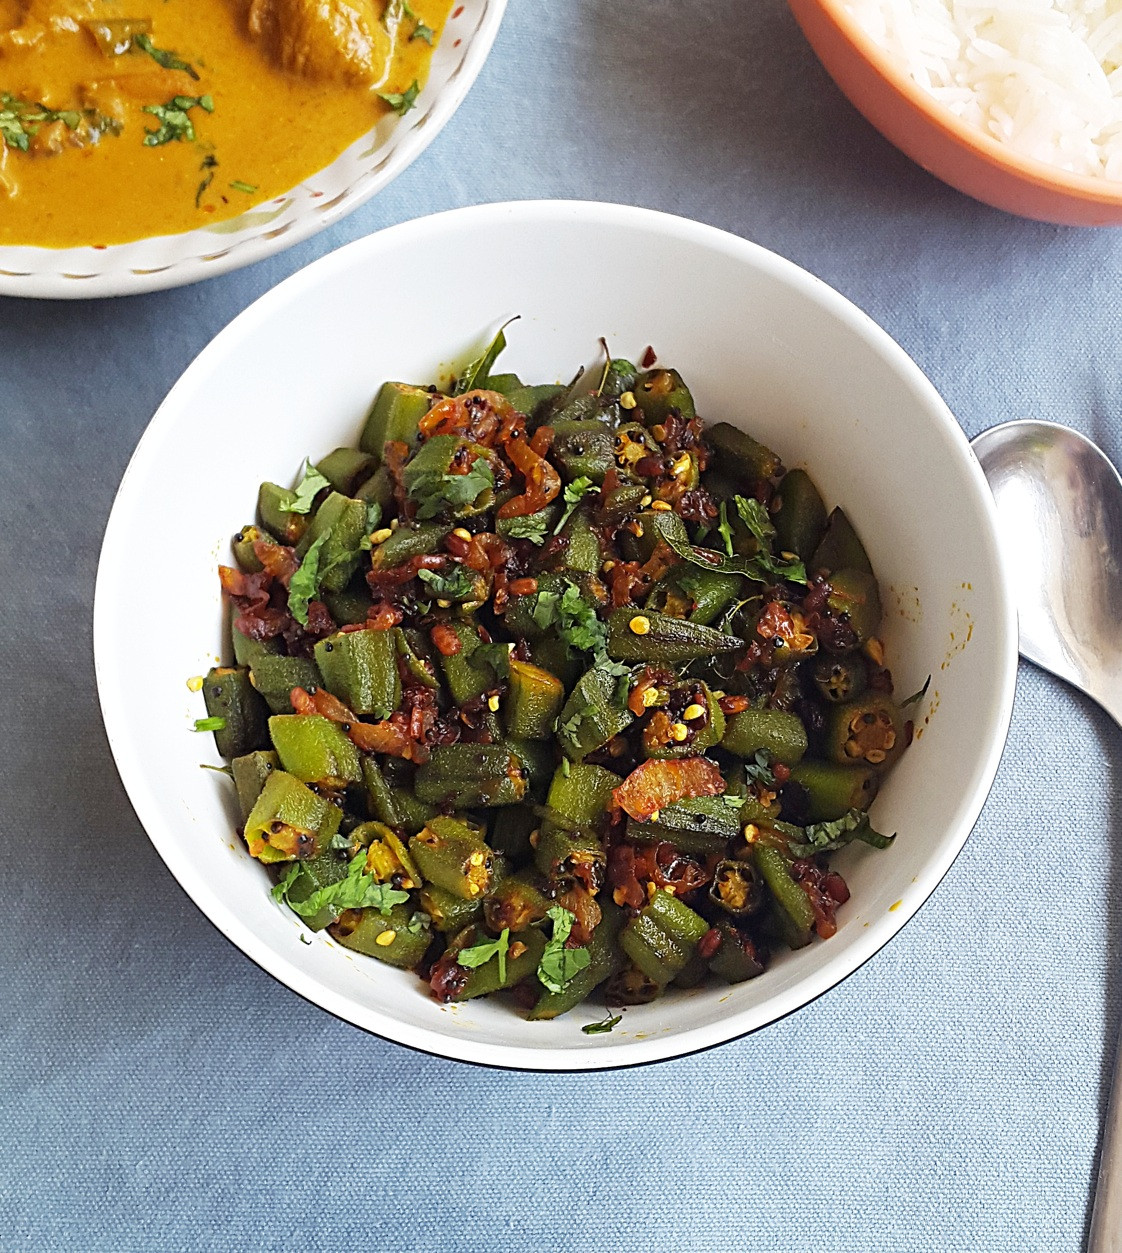 Bhindi Recipes Indian
 Vendakkai poriyal recipe Okra bhindi stir fry recipe